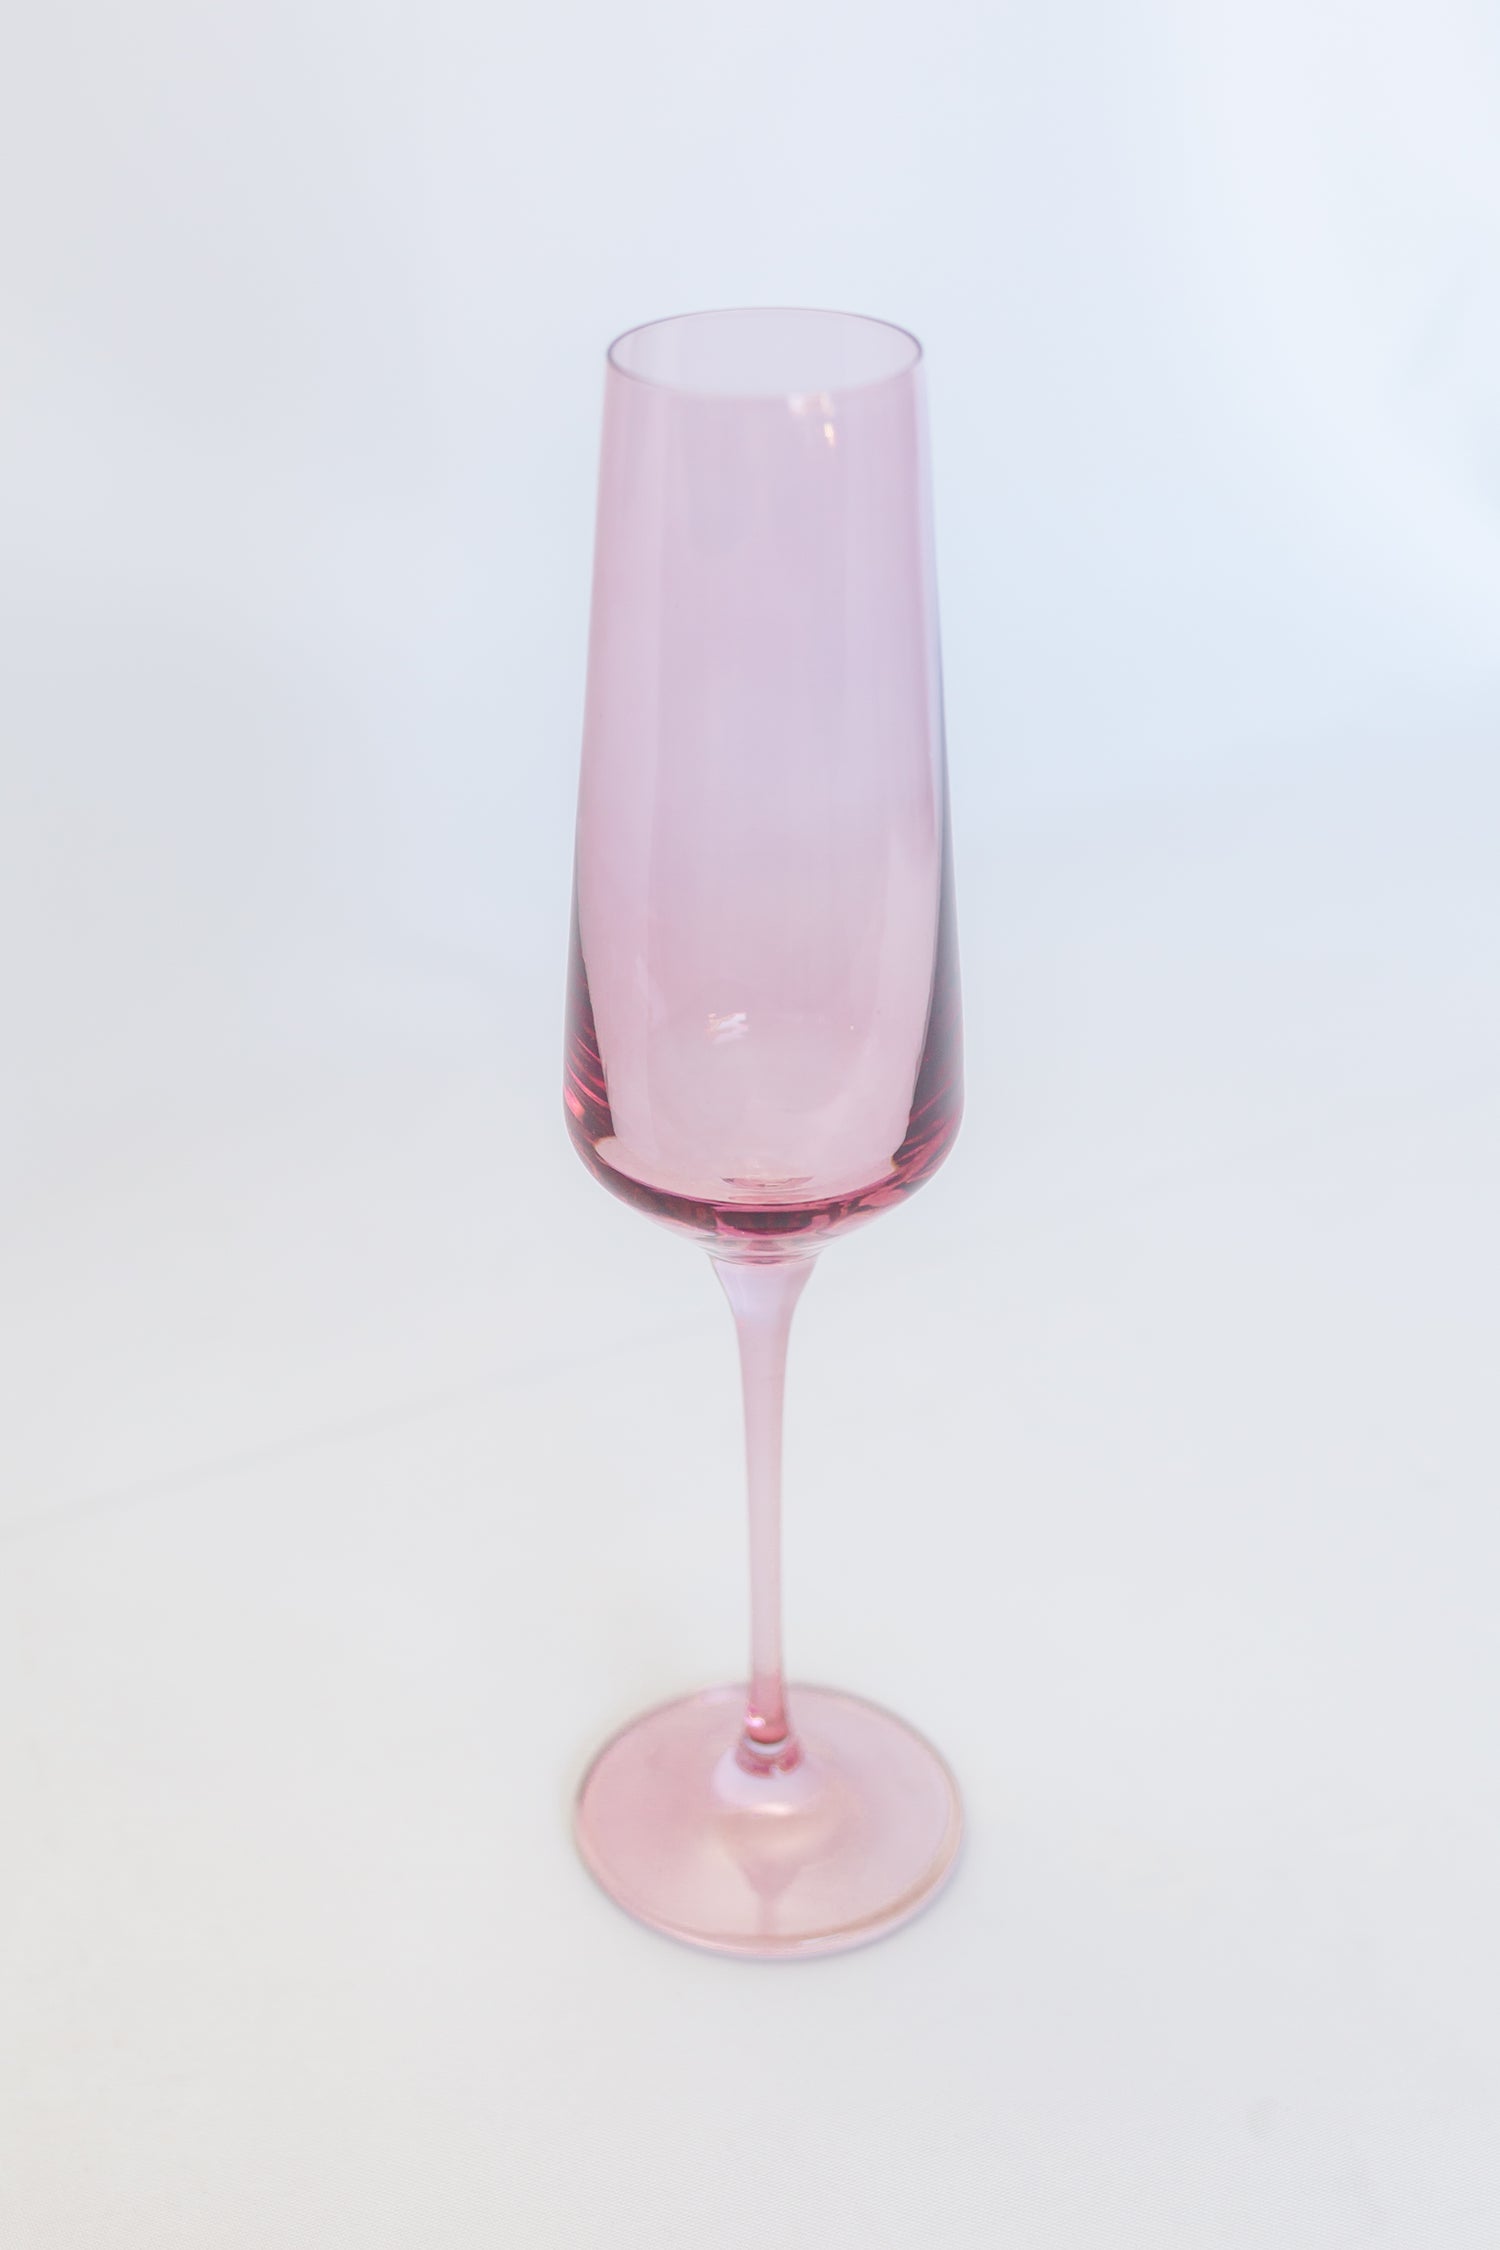 Estelle Colored Champagne Flute - Set of 2 {Rose}